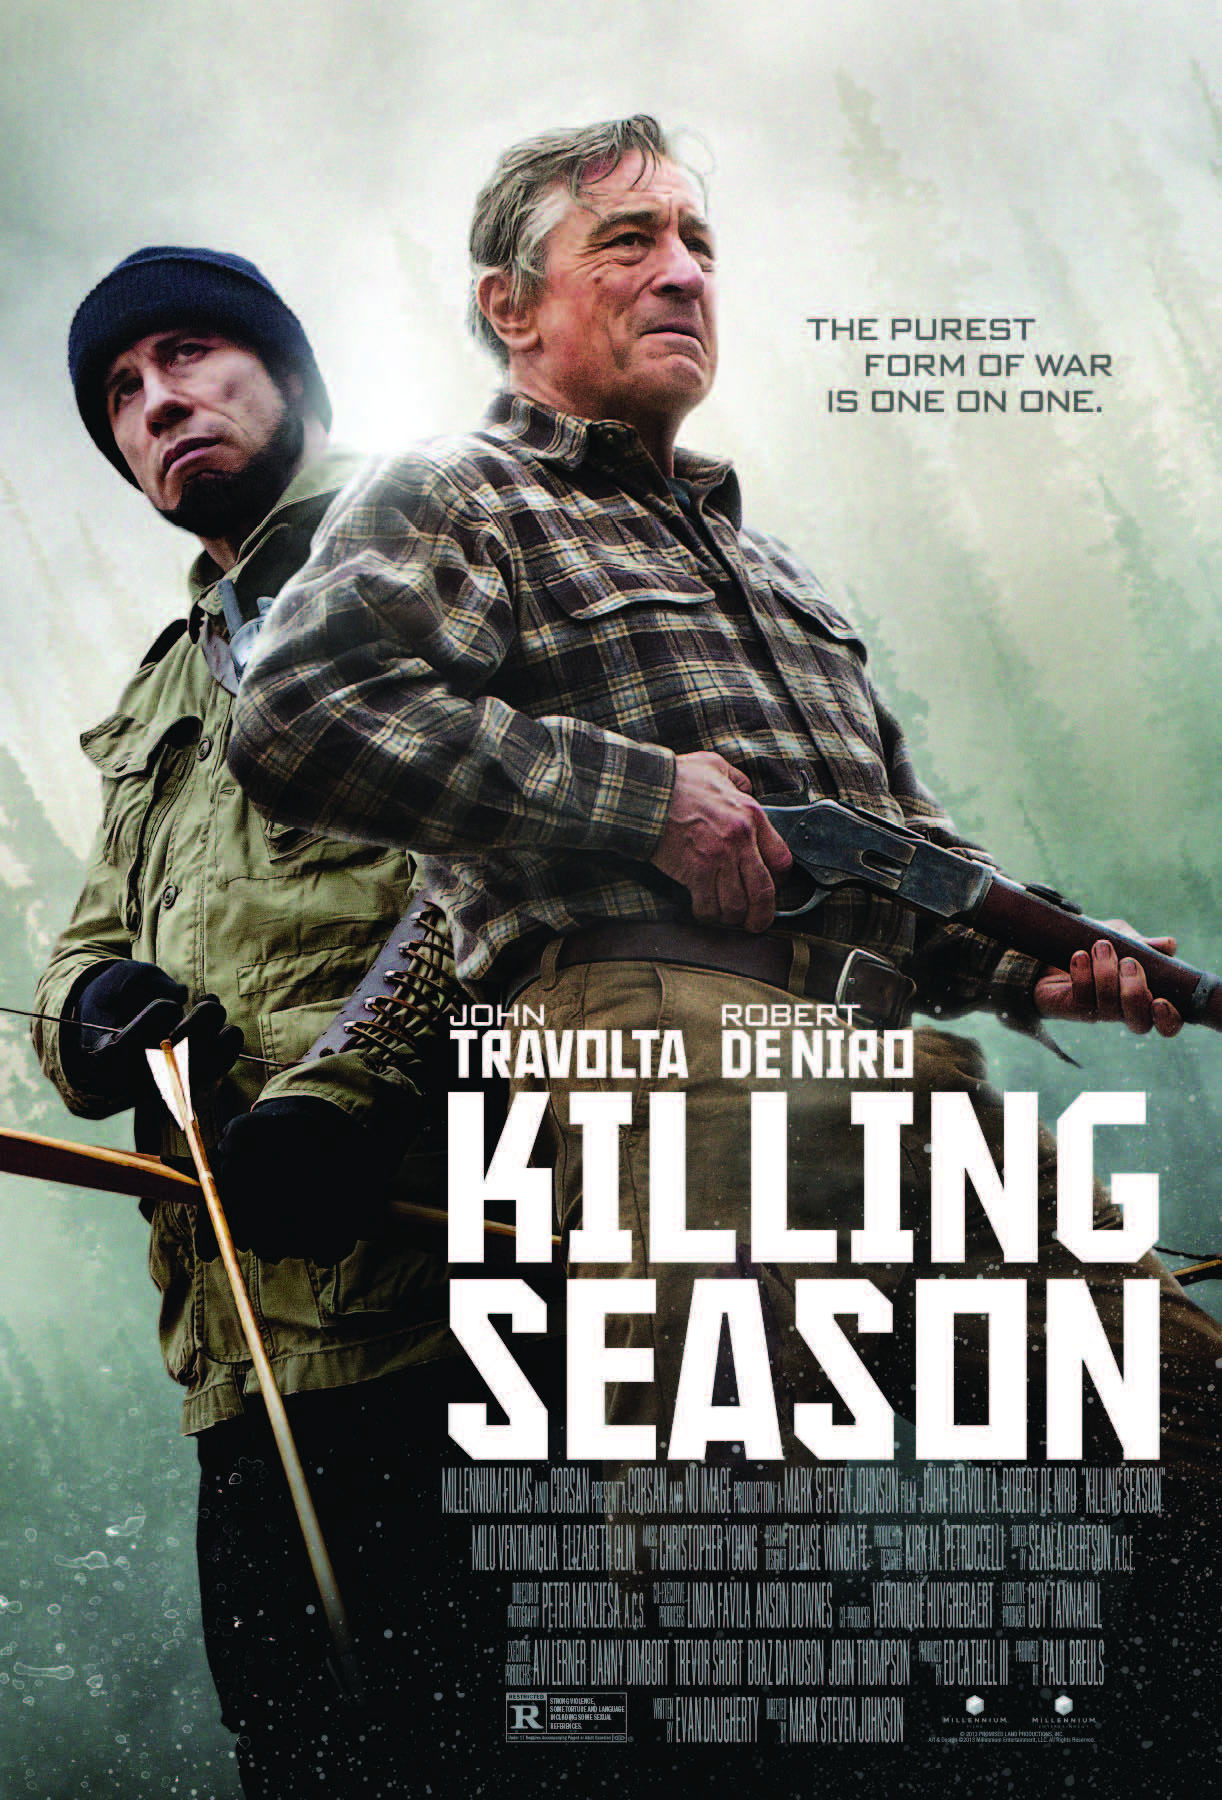 Killing Season (2013) ฤดูฆ่า ล่าไม่ยั้ง Robert De Niro